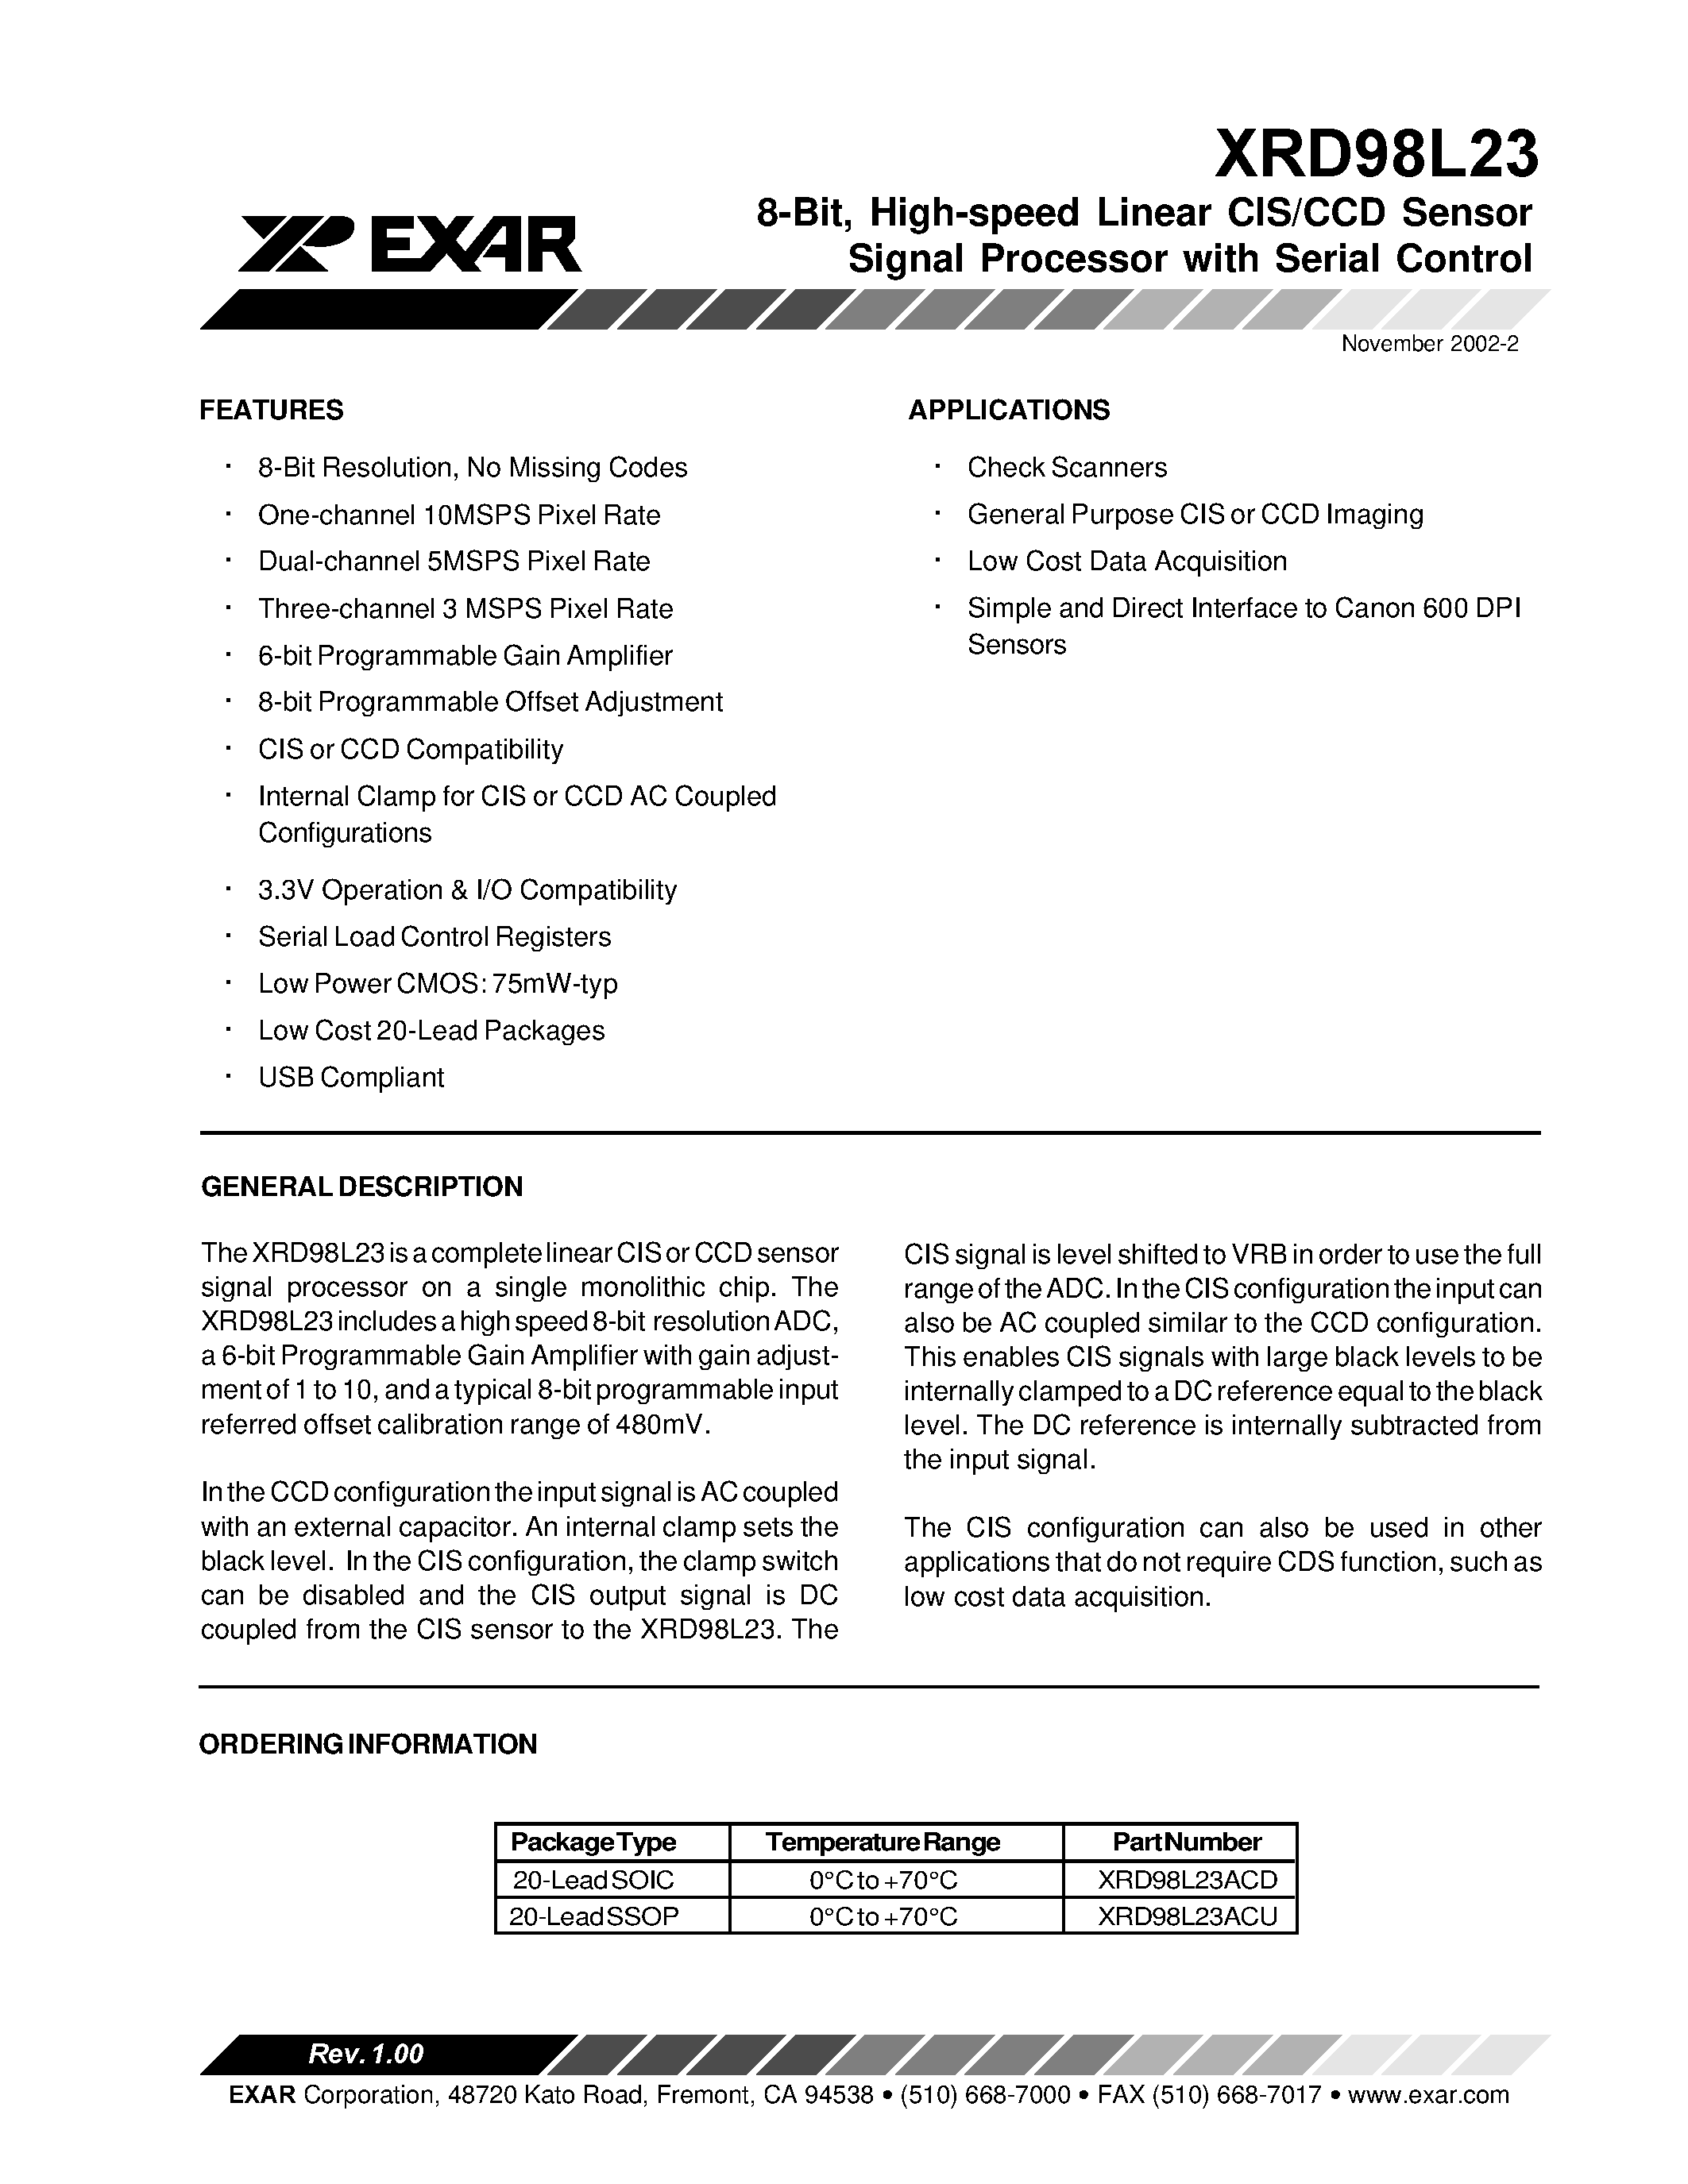 Datasheet XRD98L23 - 8-Bit High-speed Linear CIS/CCD Sensor Signal Processor with Serial Control page 1